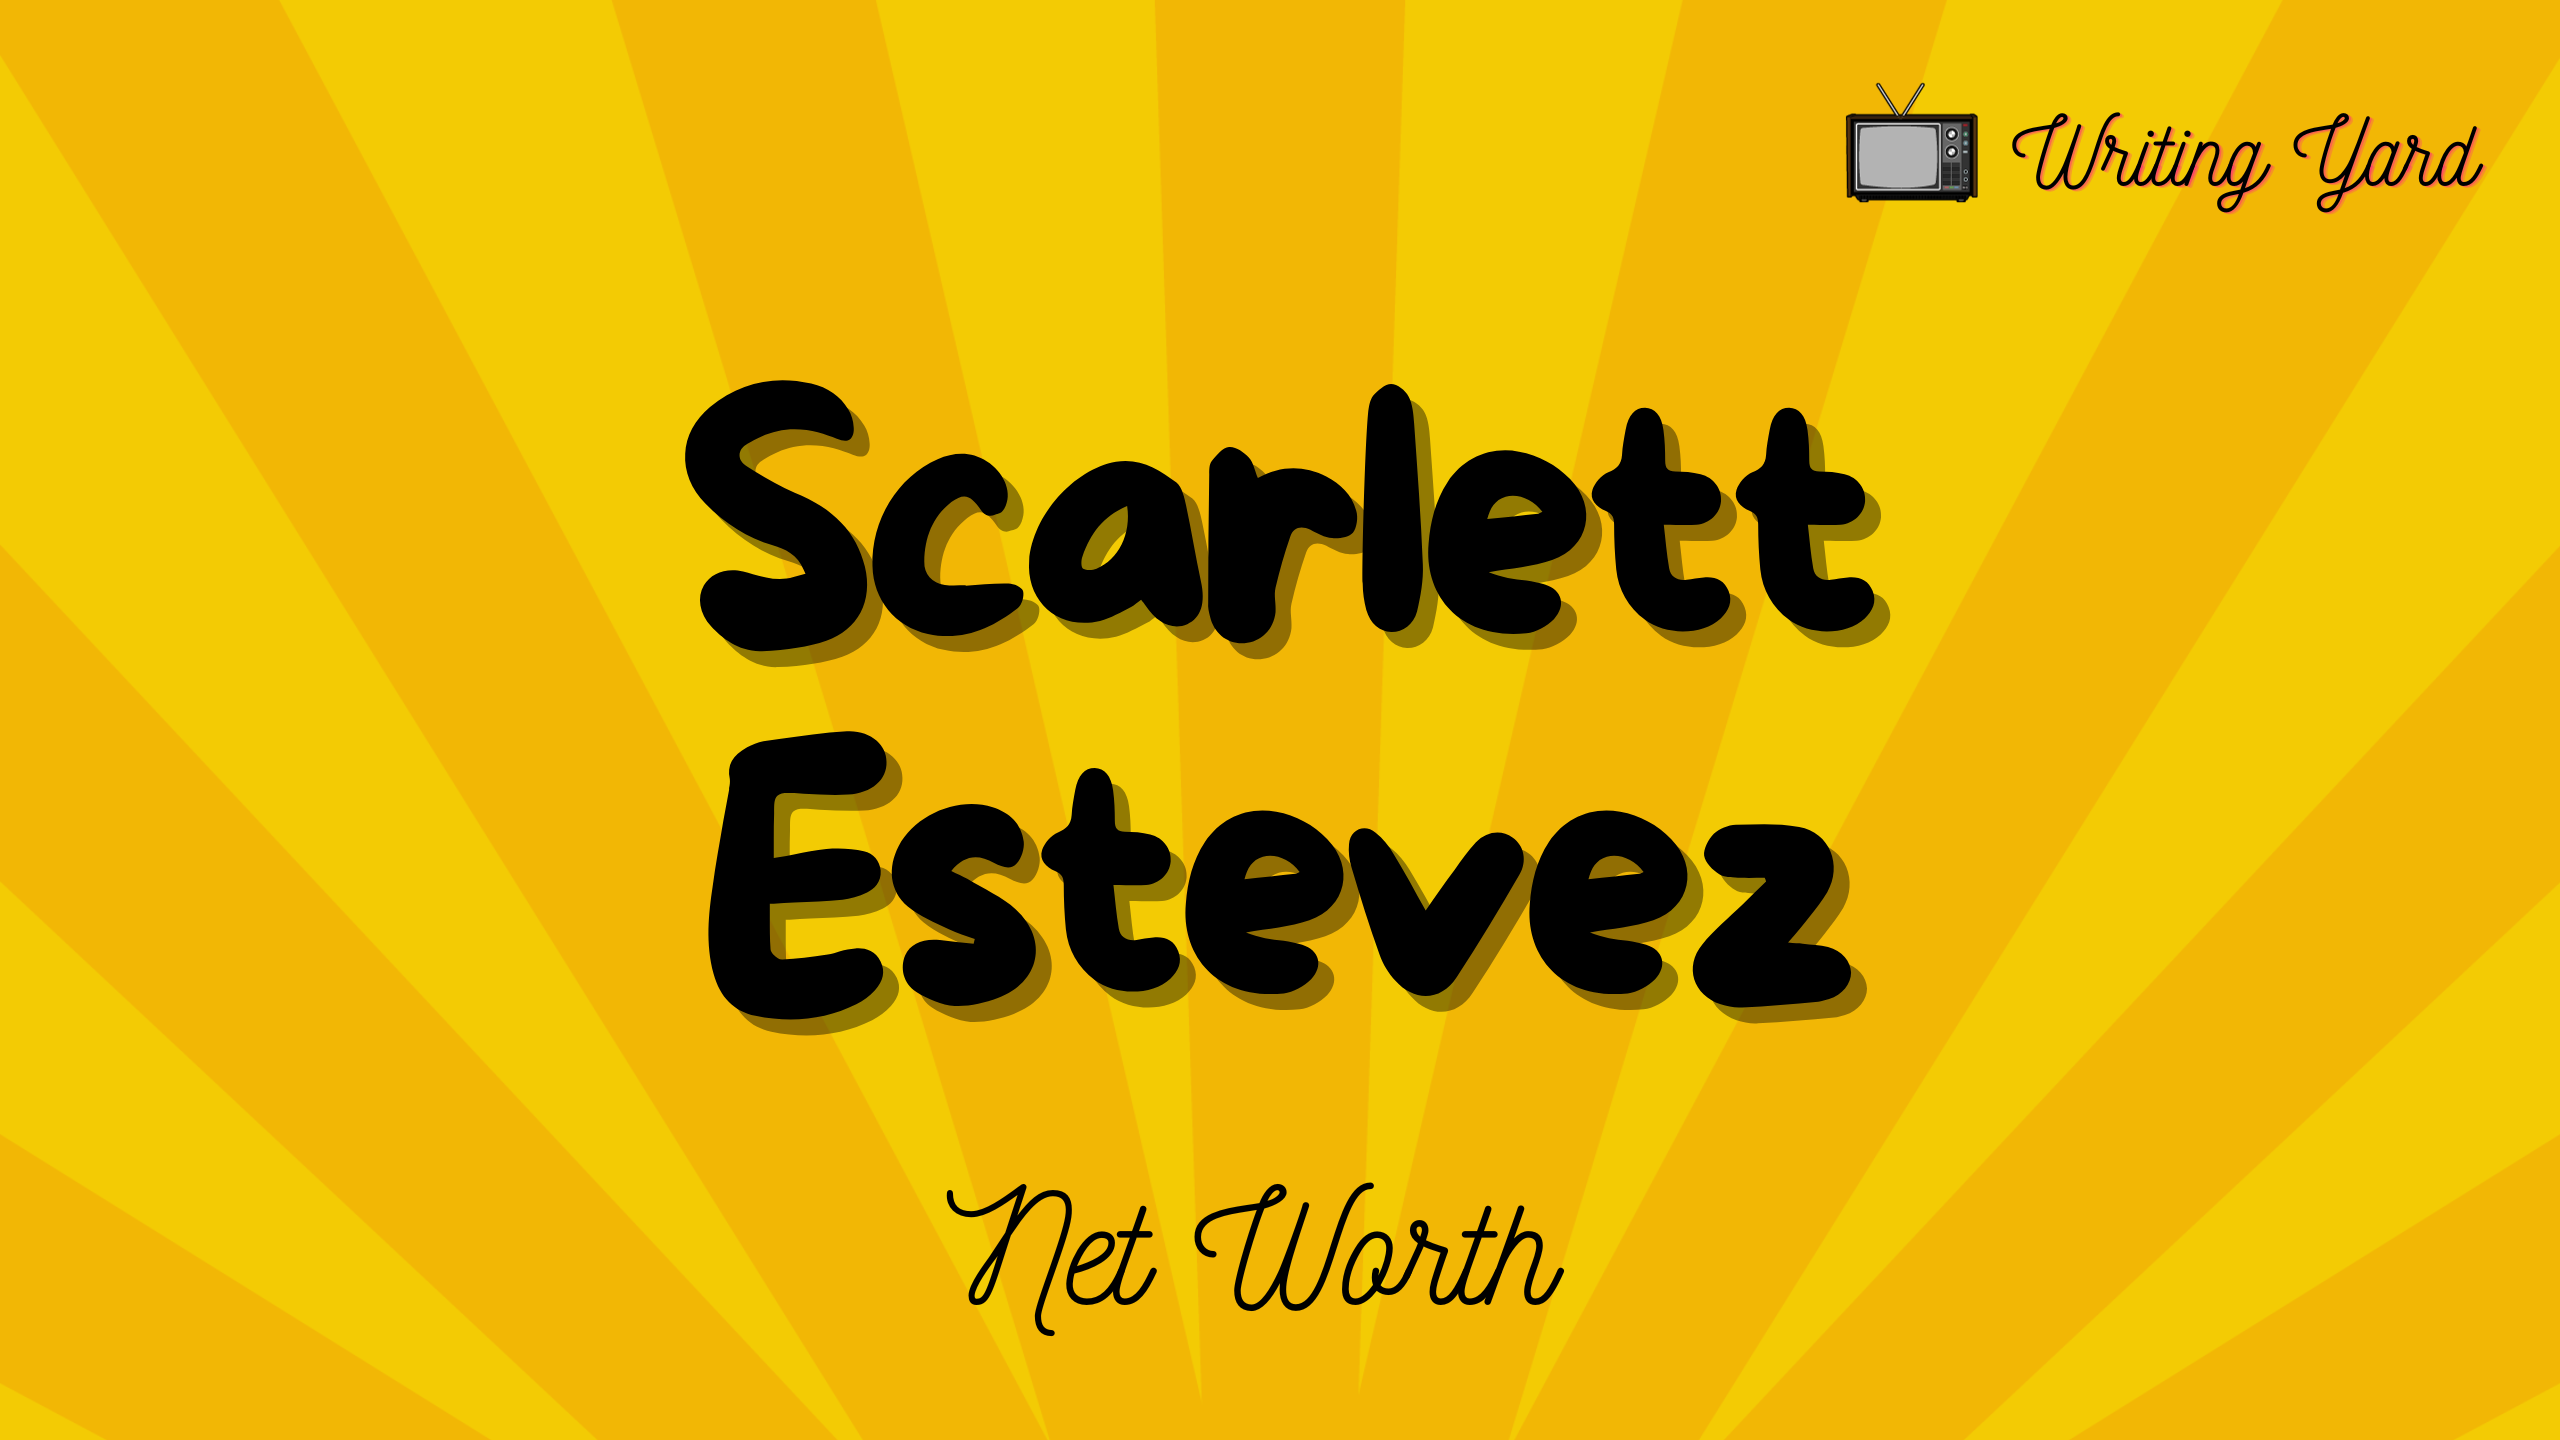 Scarlett Estevez Net Worth